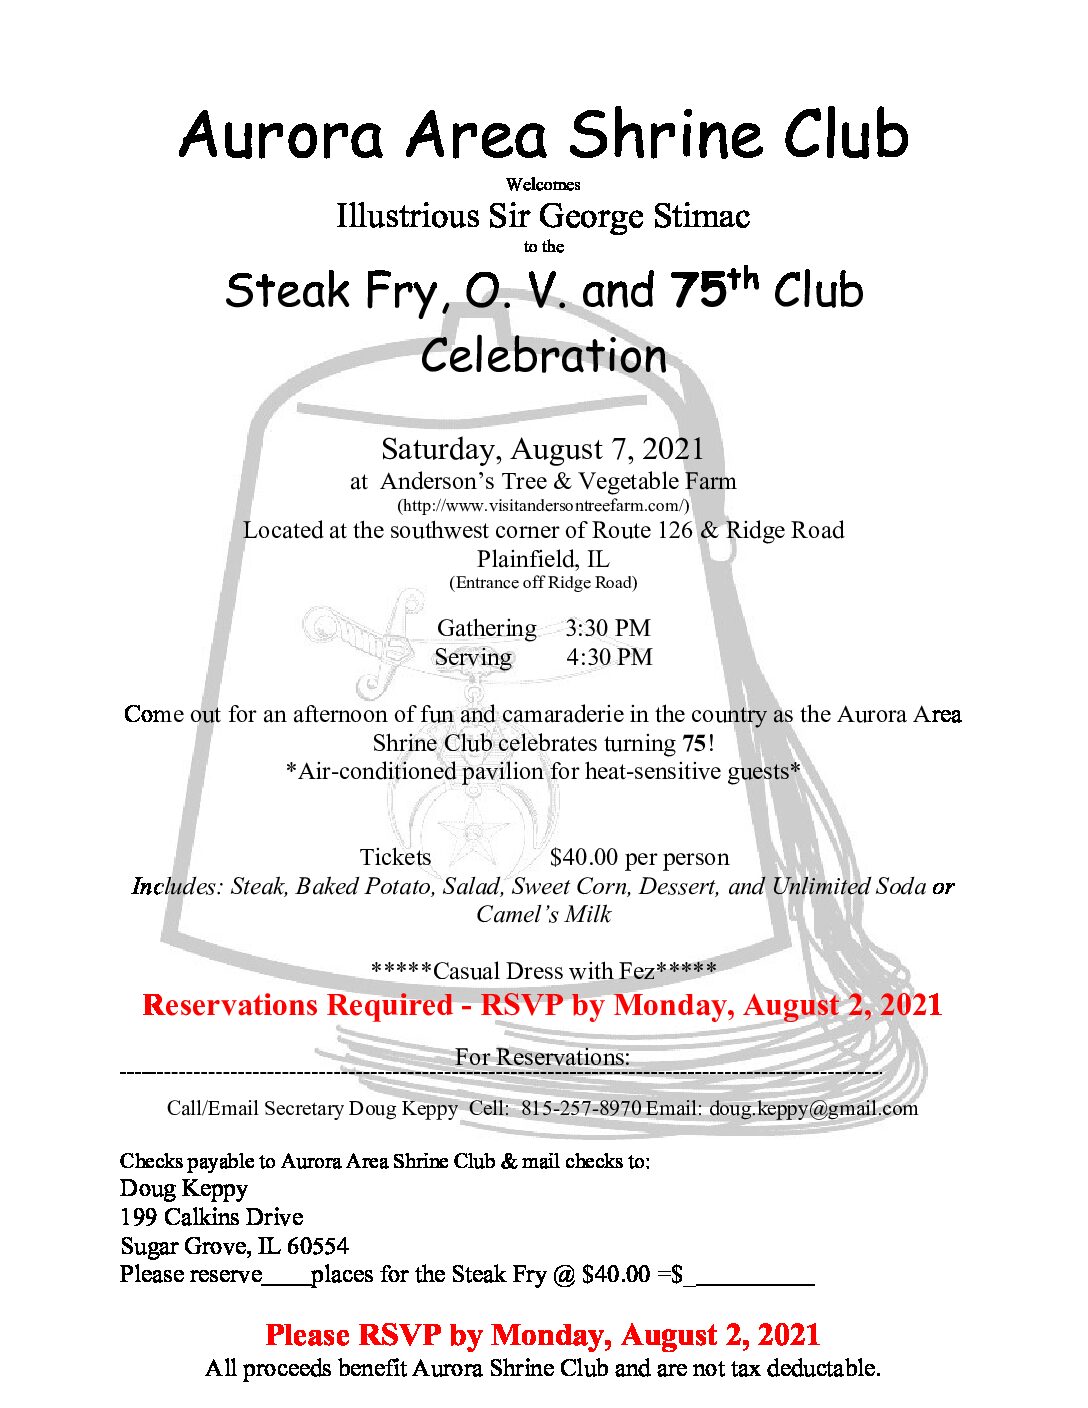 Aurora Area Shrine Club Steak Fry OV - Medinah Shriners